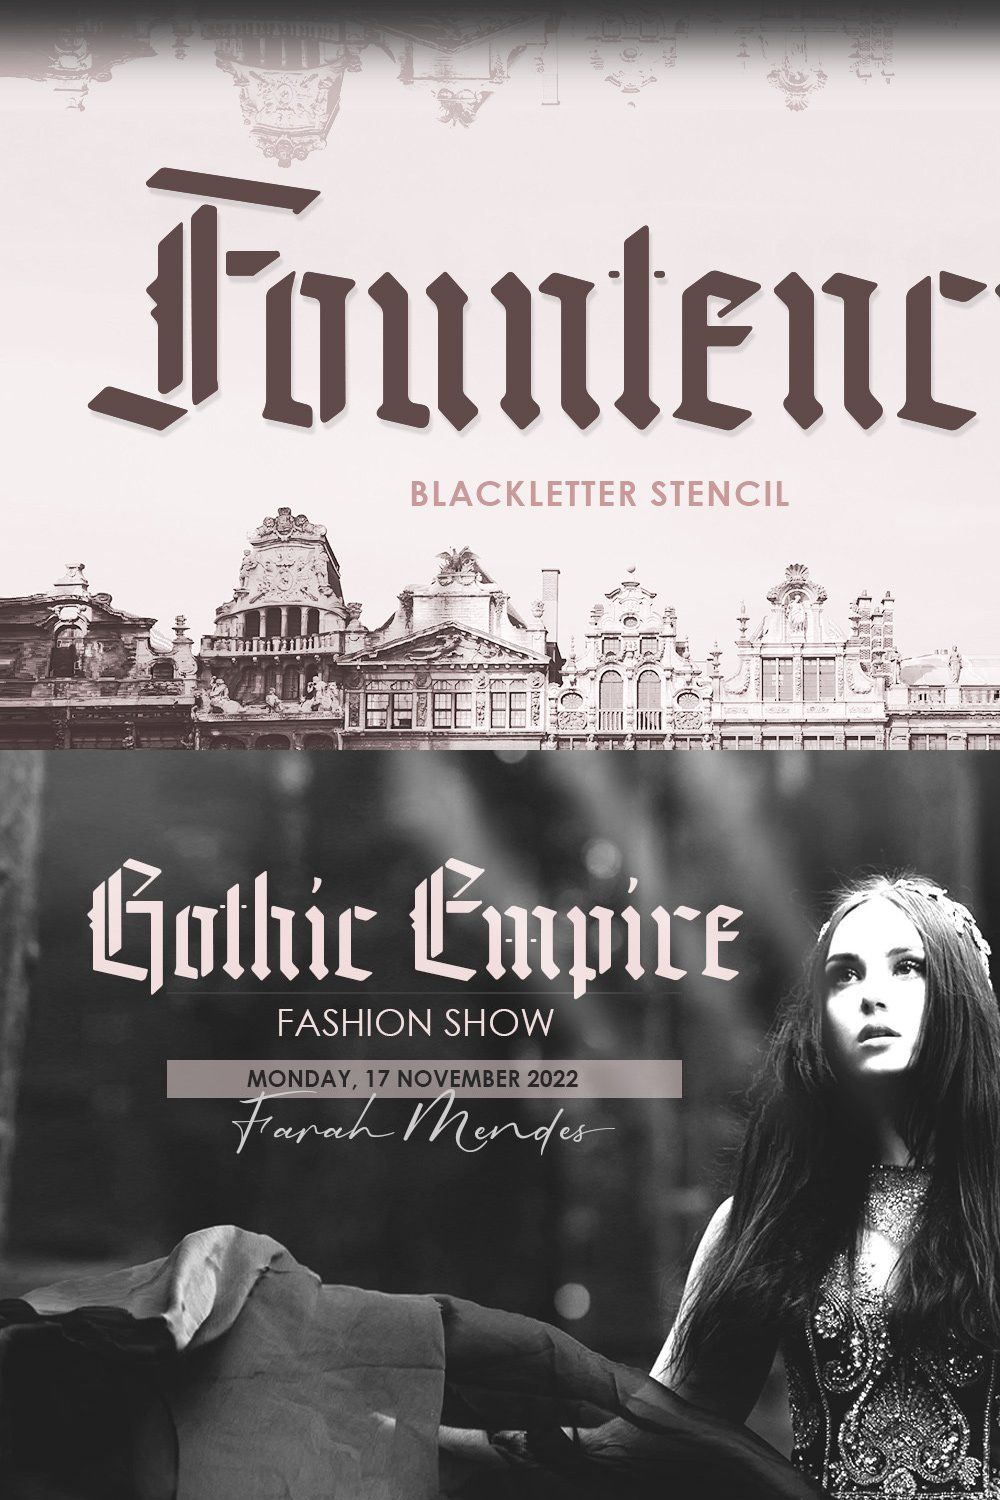 Fountencil - Blackletter Stencil pinterest preview image.